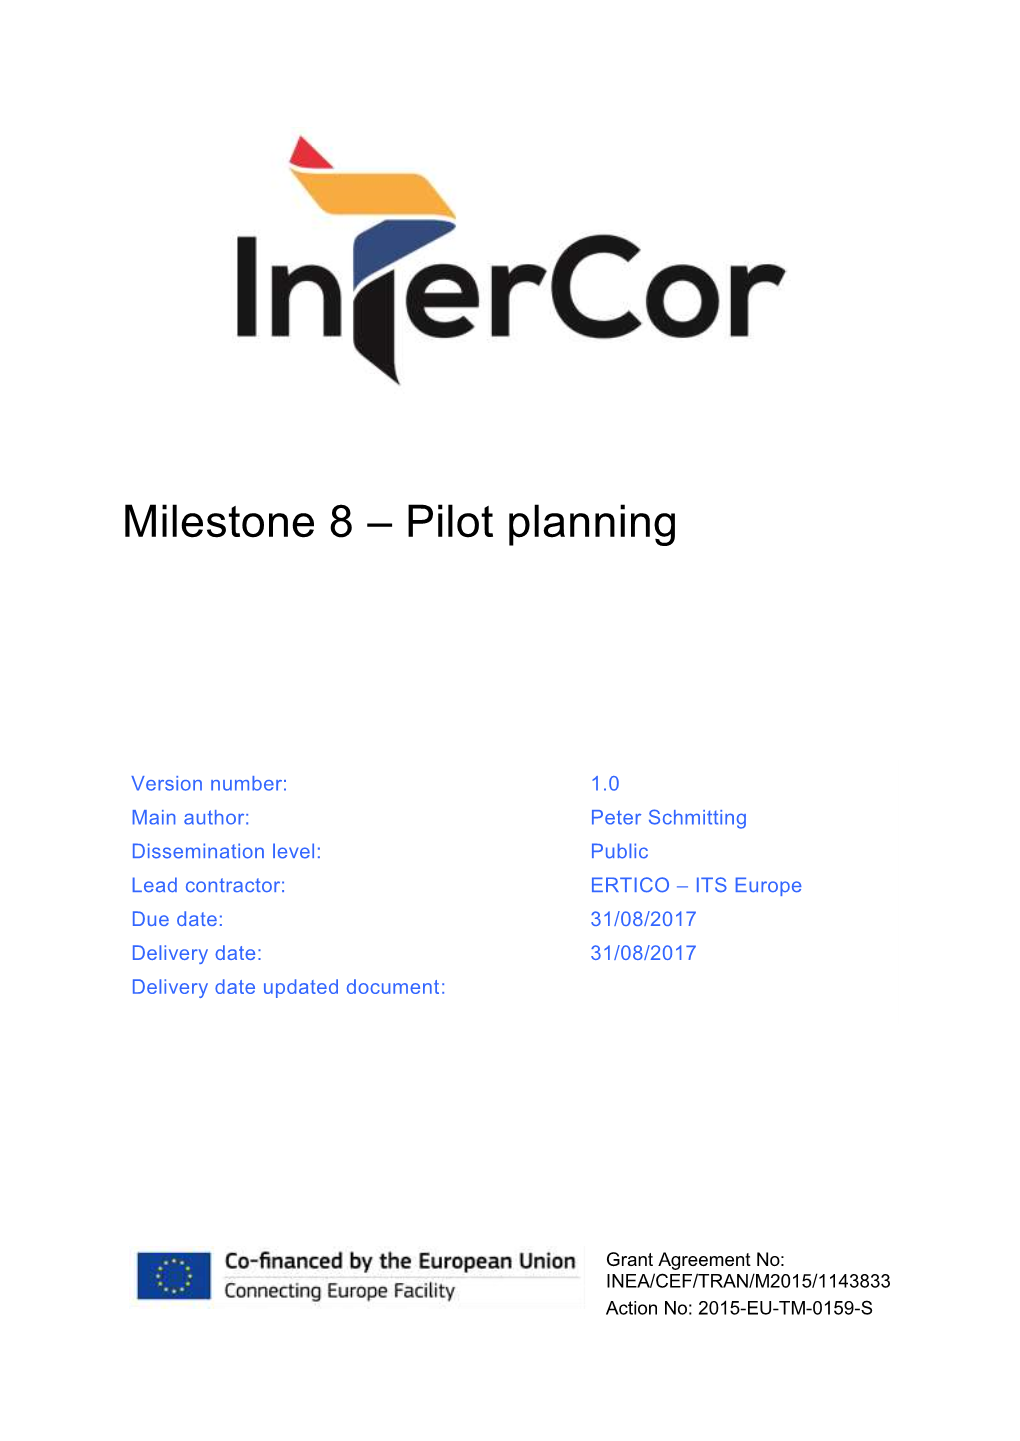 Pilot Planning